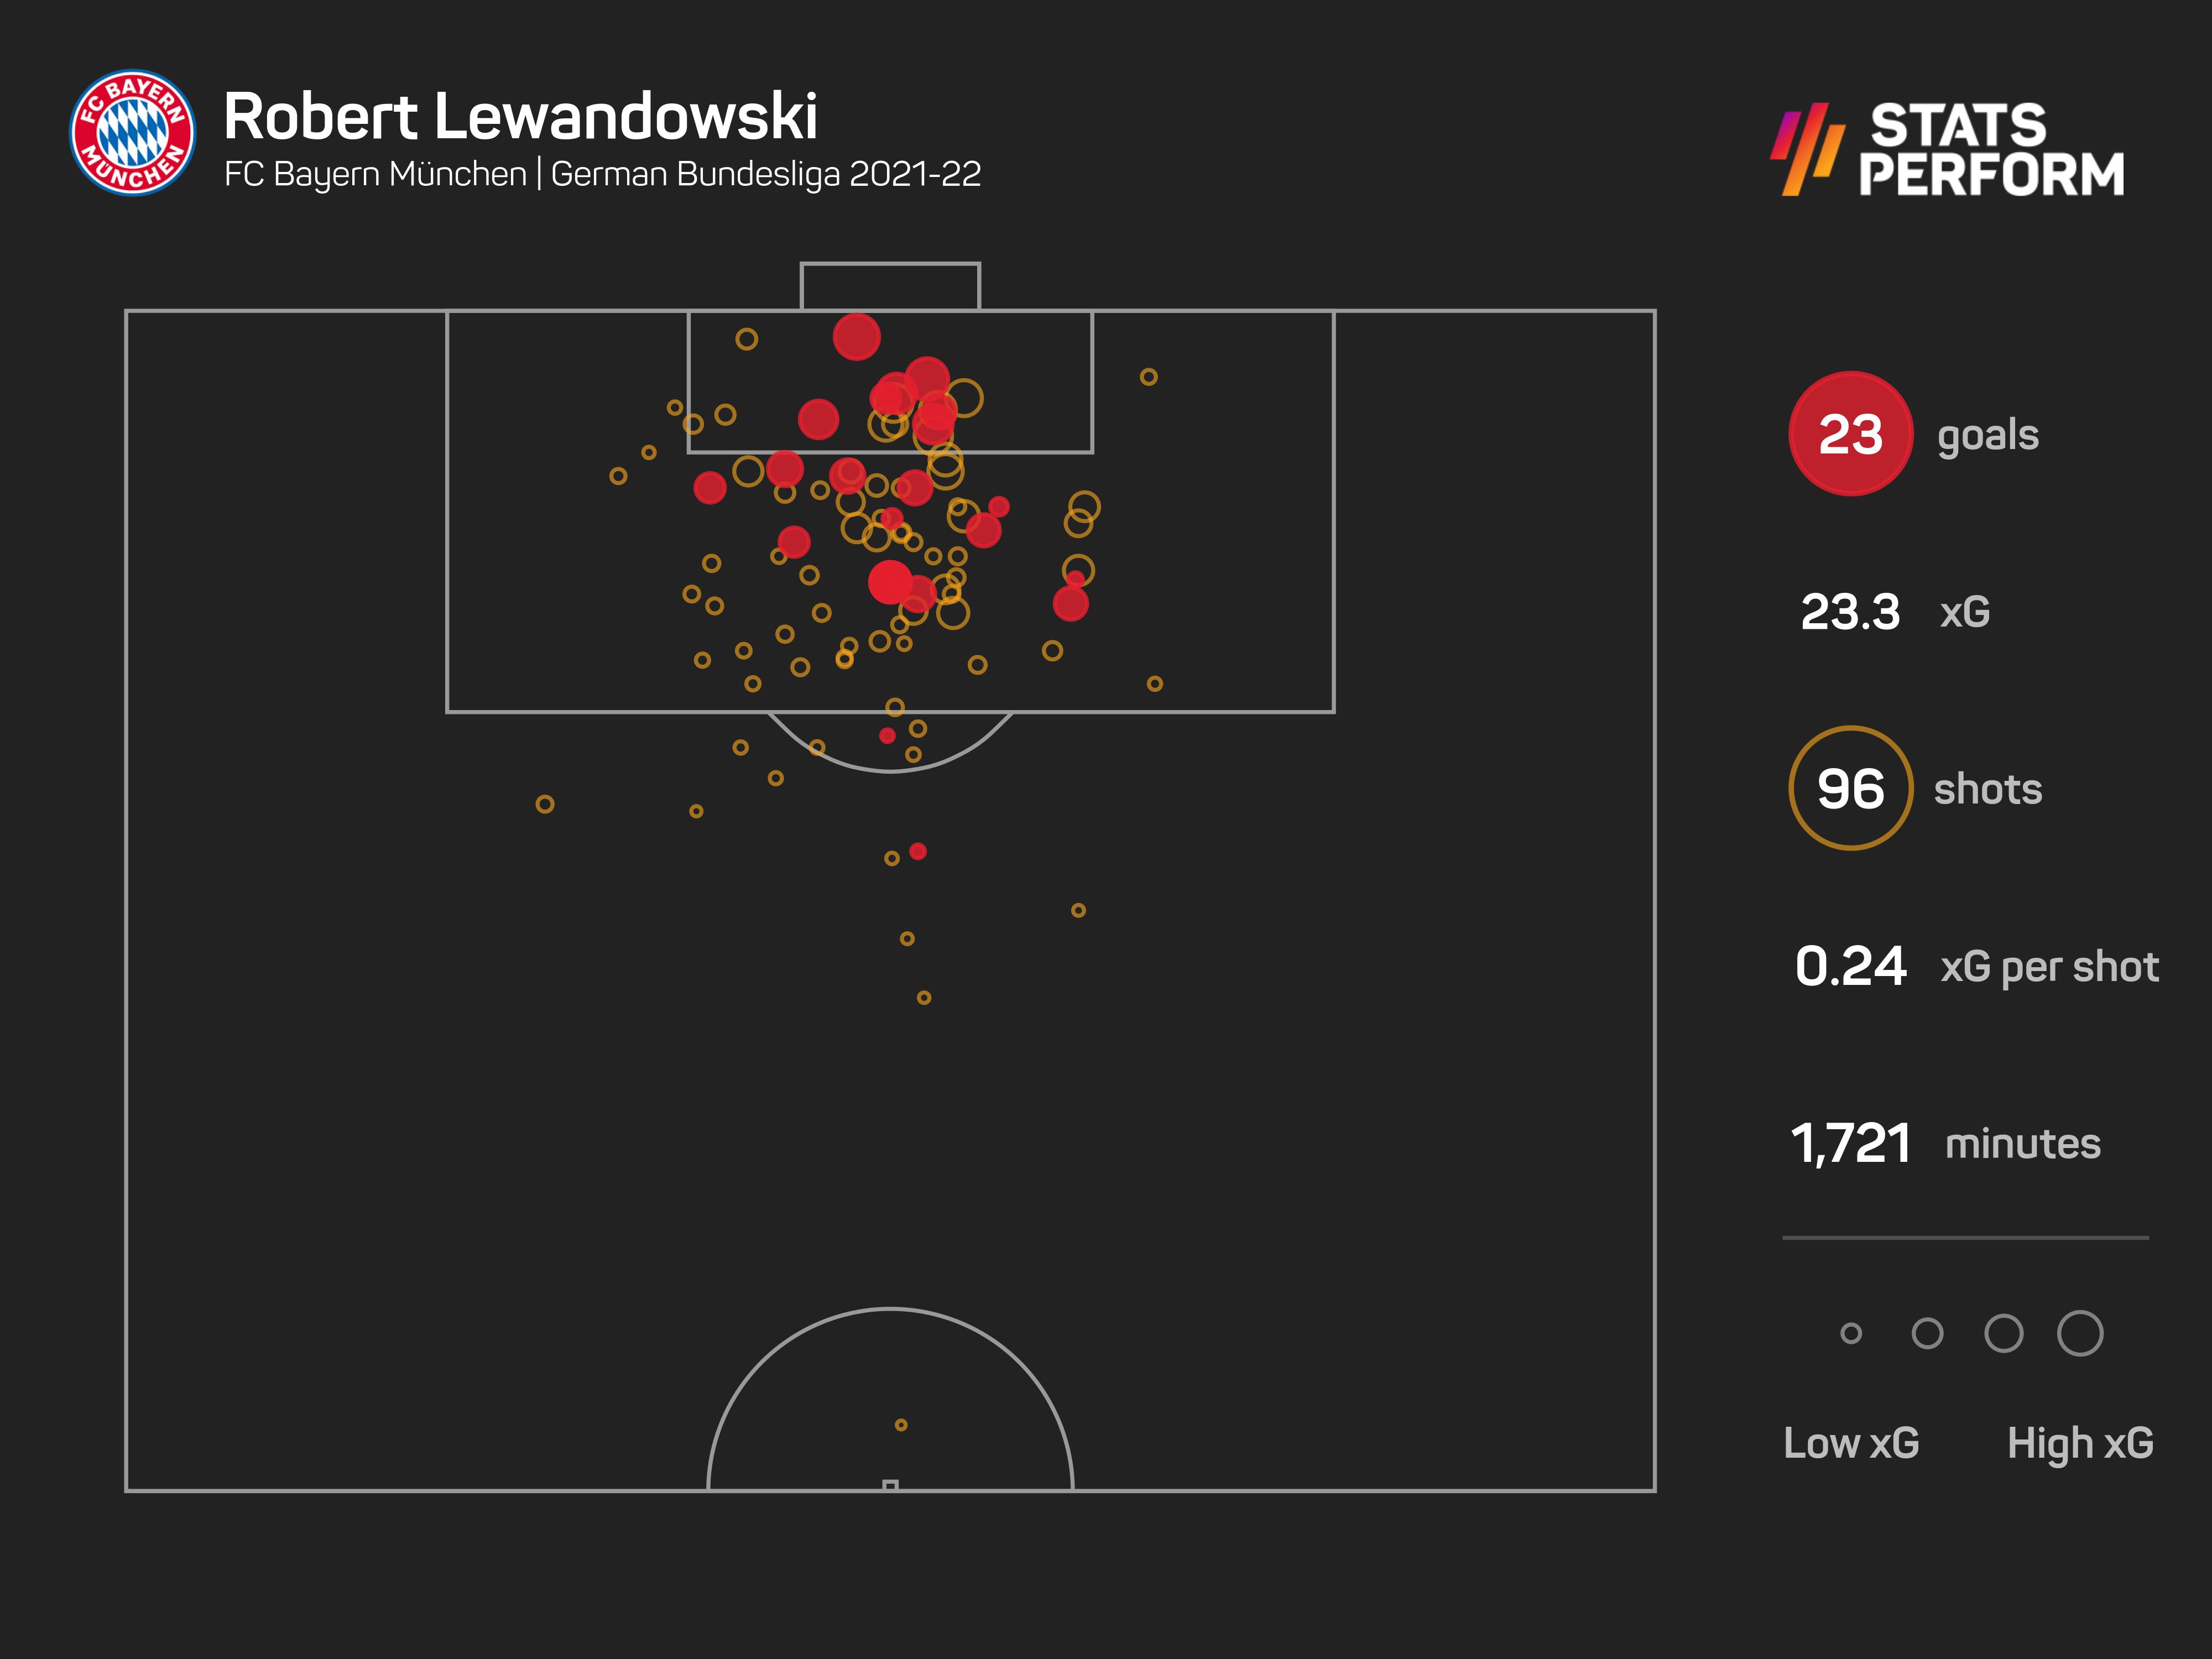 Robert Lewandowski: Bundesliga goals and xG as of 26012022